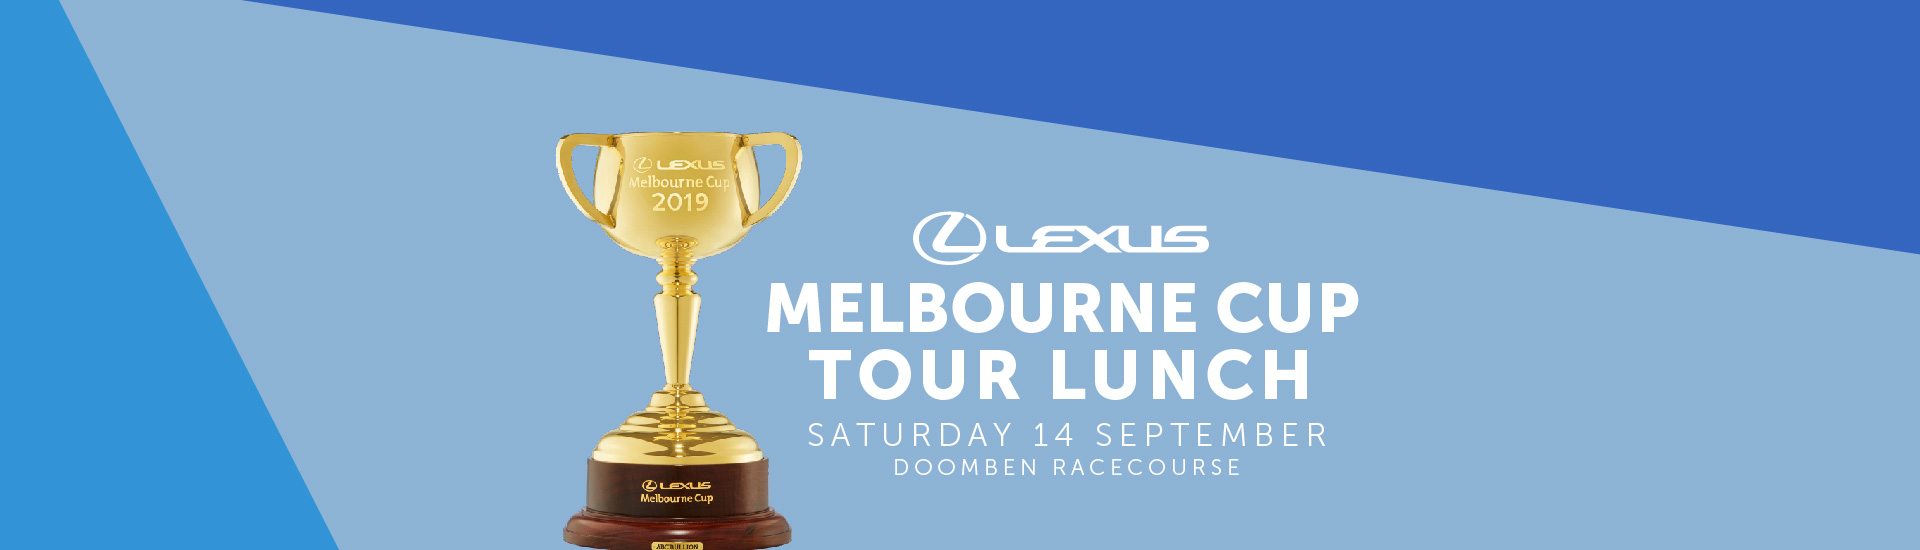 Melbourne Cup Tour Lunch | Brisbane Racing Club 